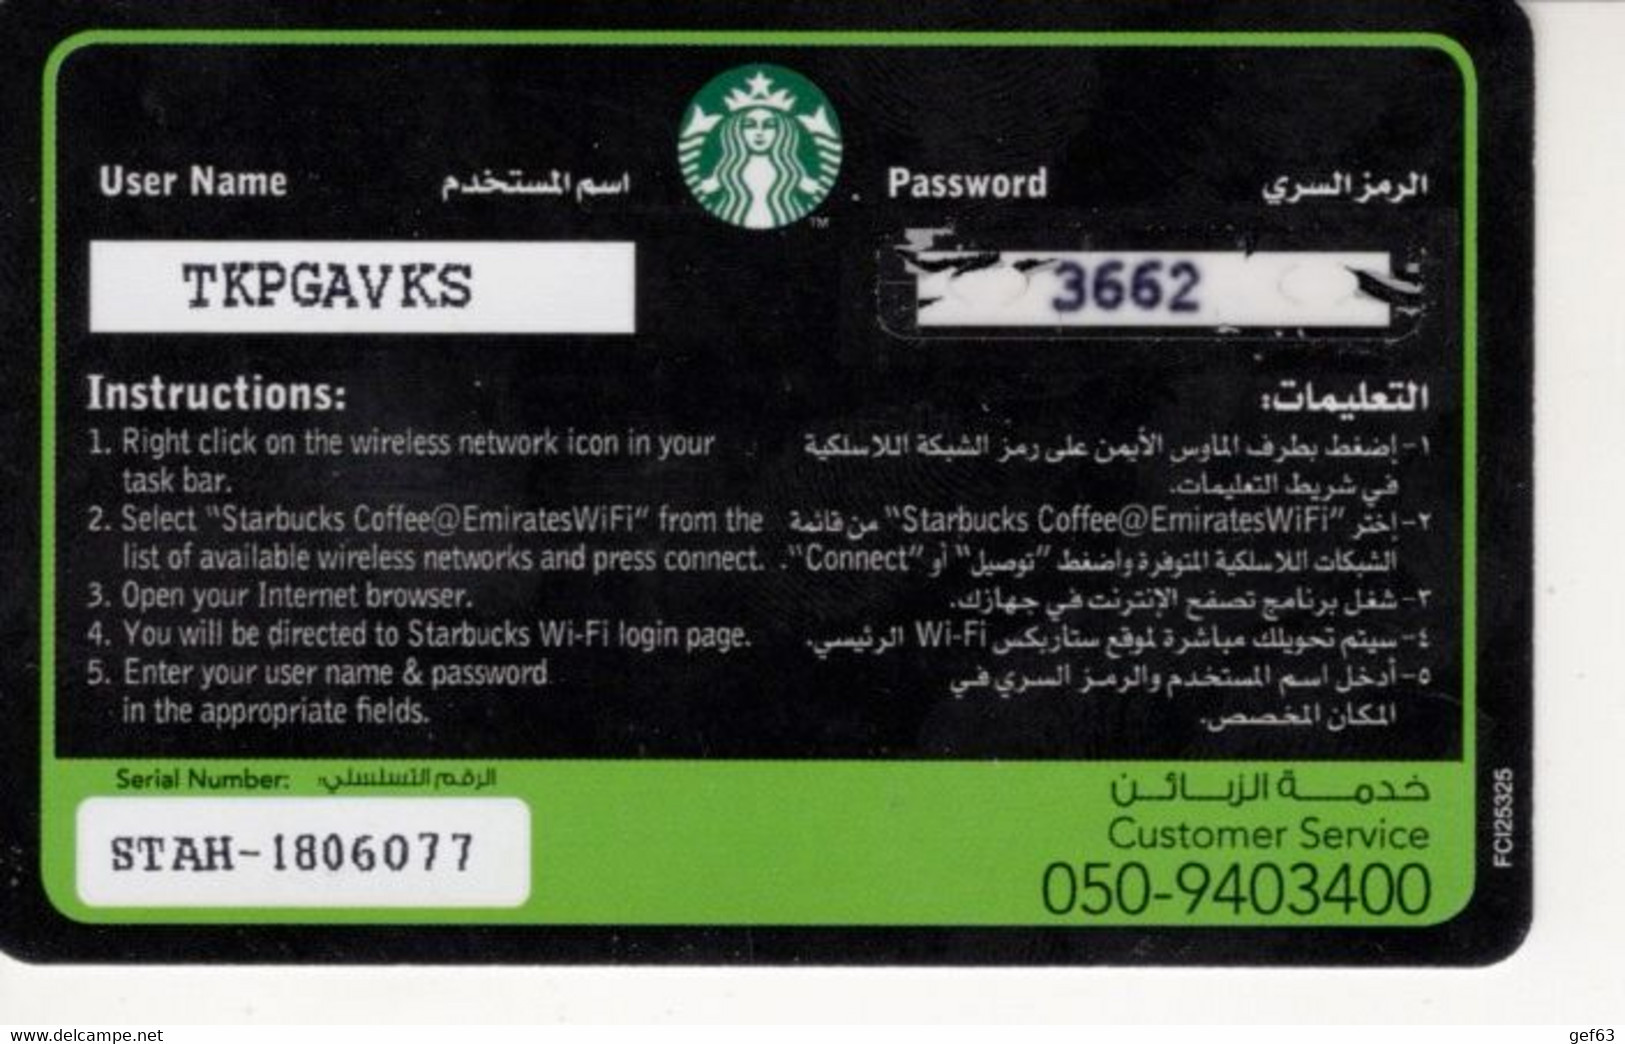 Starbucks WI-FI Network - 1 Hour - Émirats Arabes Unis - Food